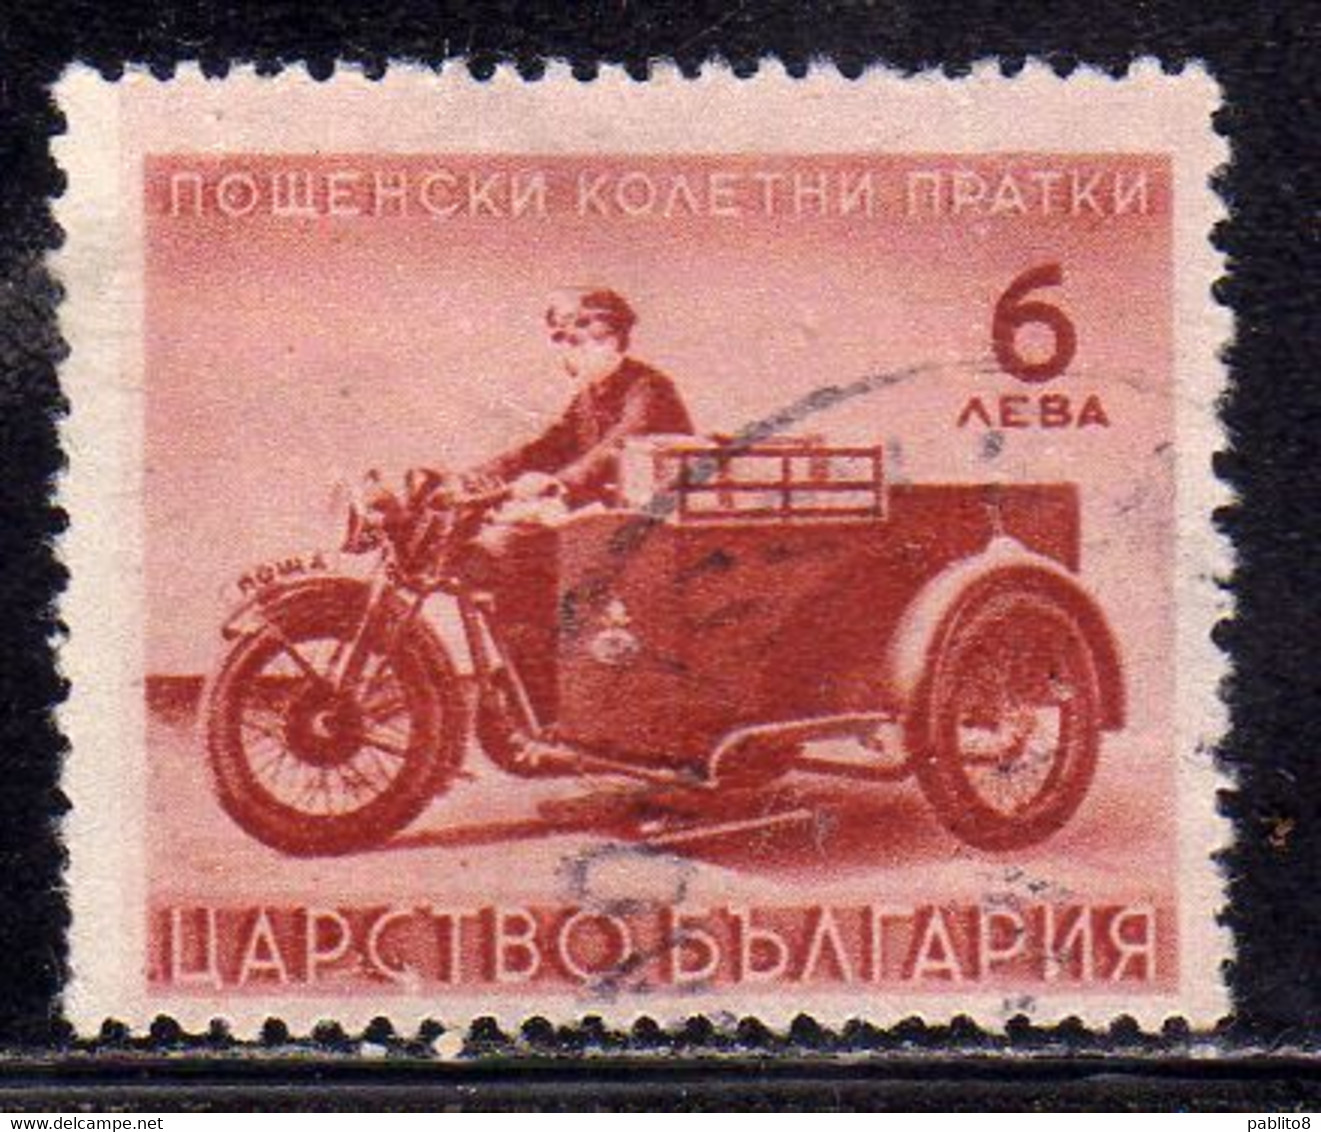 BULGARIA BULGARIE BULGARIEN 1942 PARCEL POST STAMPS PACCHI POSTALI MOTORCYCLE 6L USATO USED OBLITERE' - Timbres De Service